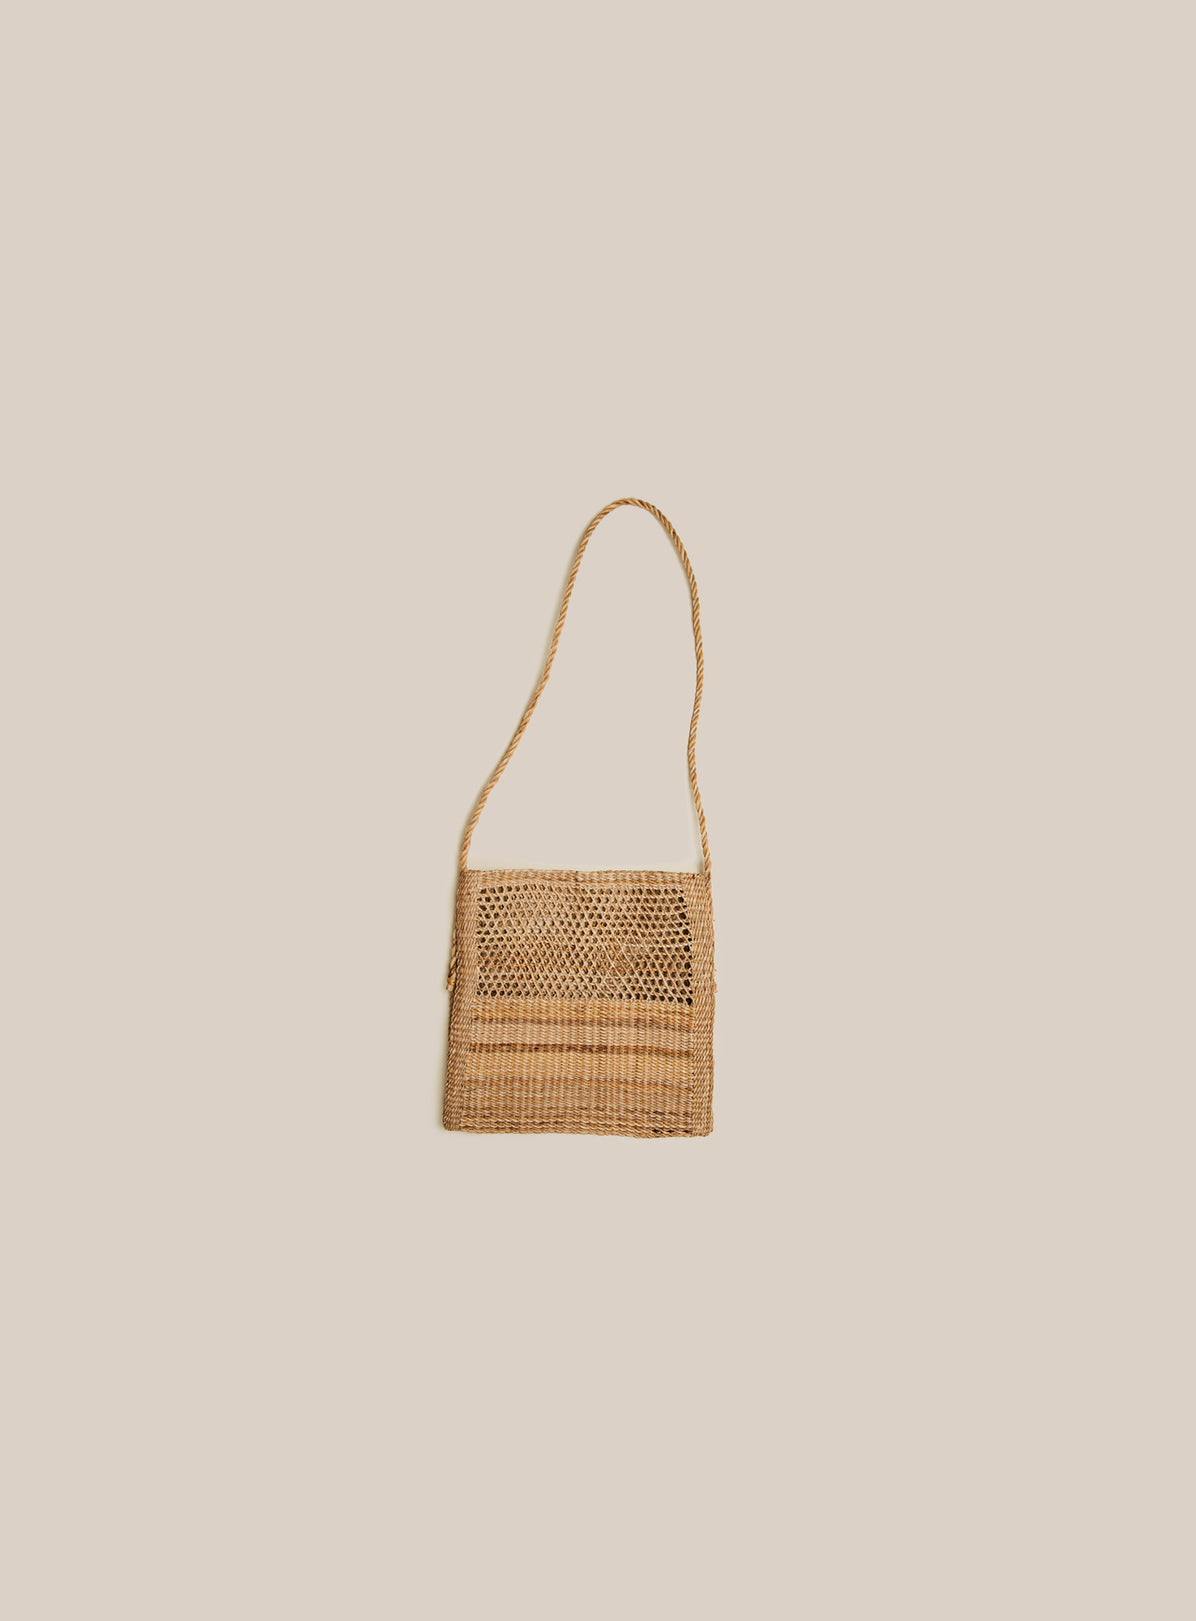 Plantain Bag by Los Tejedores - Small